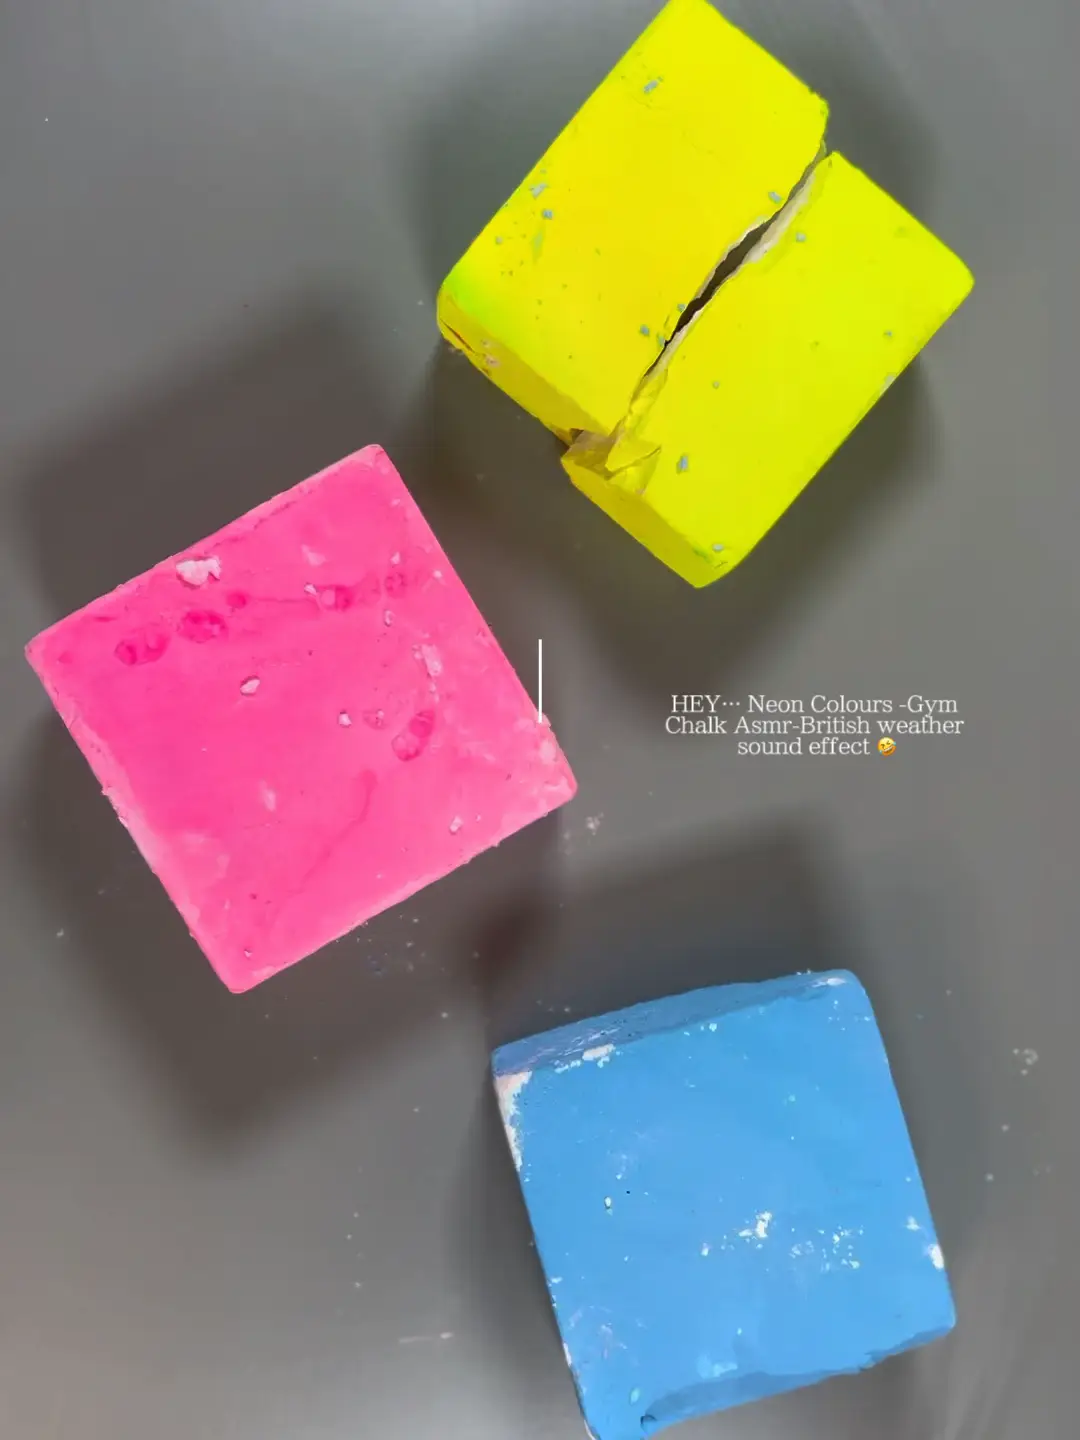 HEY… Rain + Neon Colours Gym Chalk Asmr #chalkhugs, Video published by  hey_ukasmr